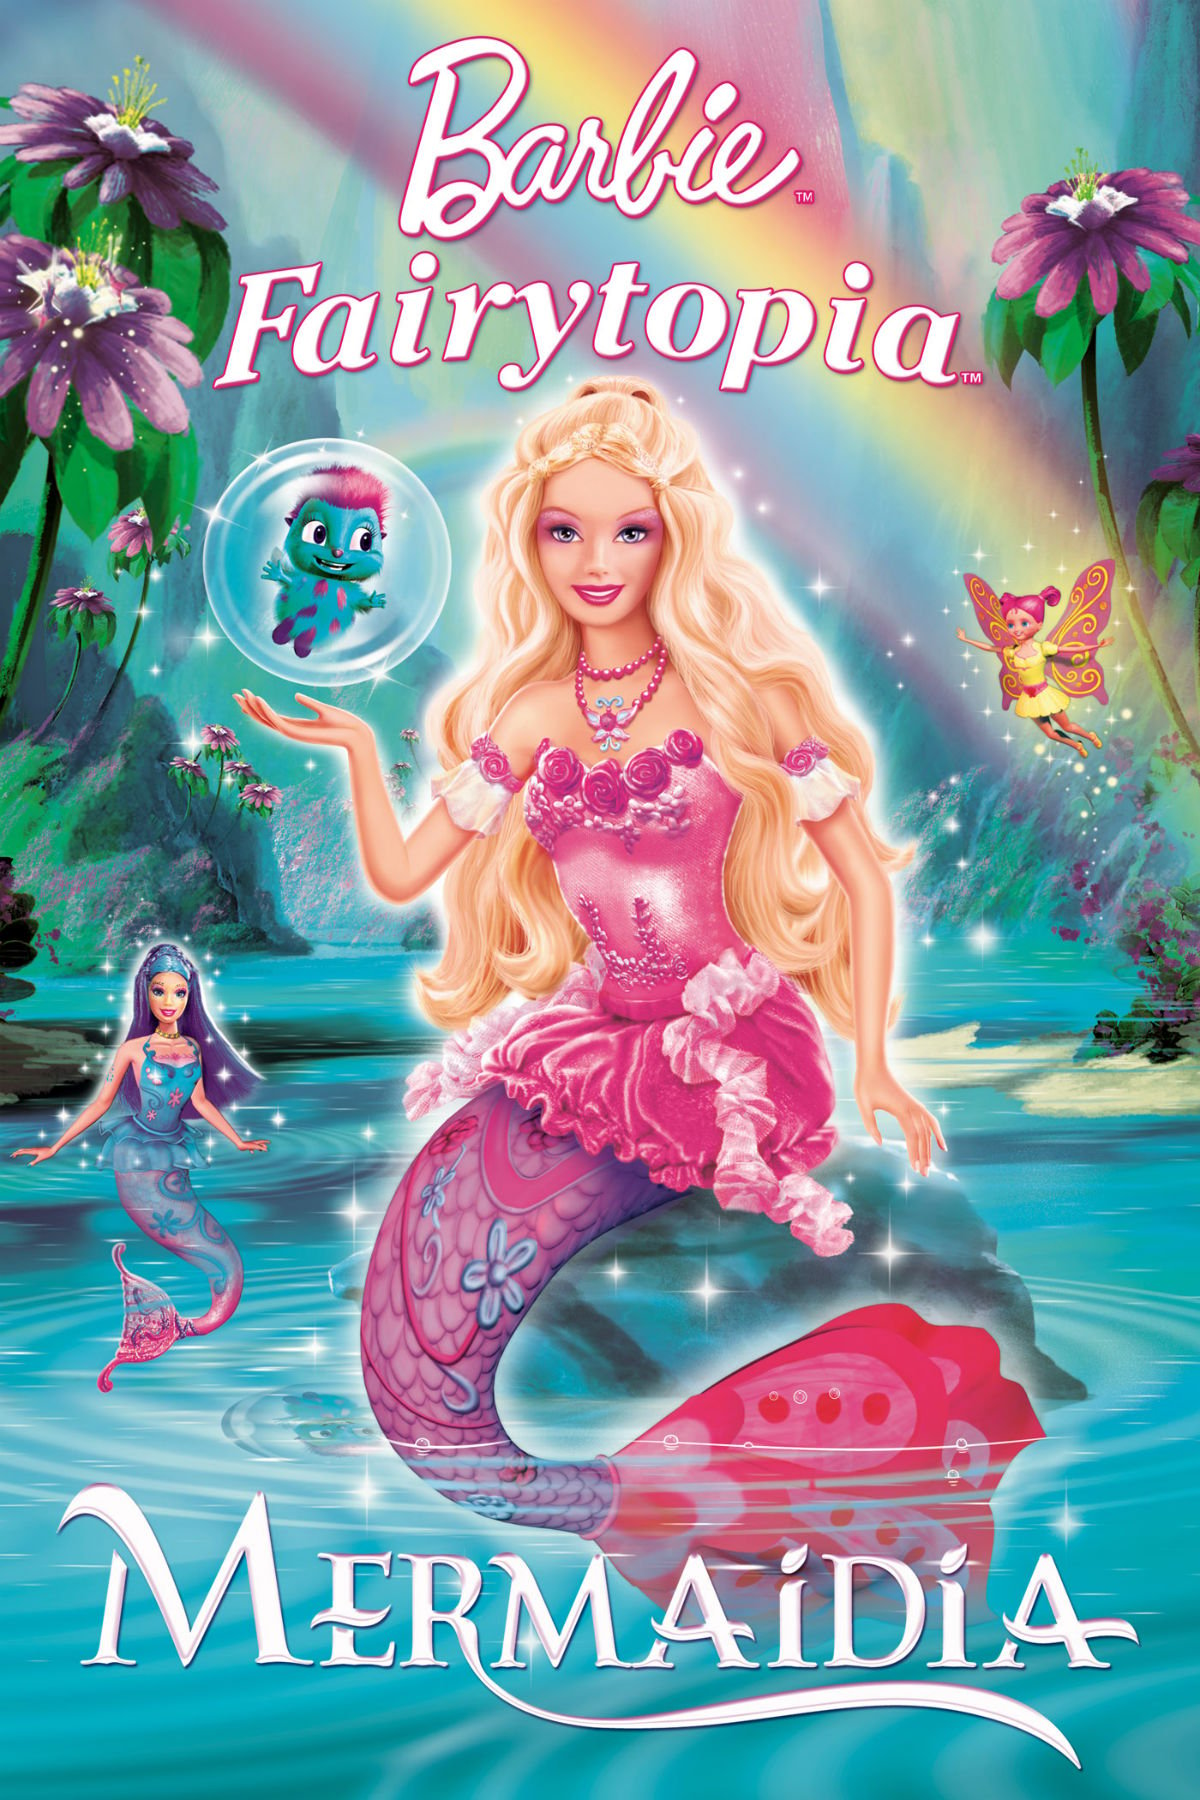 Cartel de la película Barbie Fairytopia: Mermaidia Foto por un total de - SensaCine.com